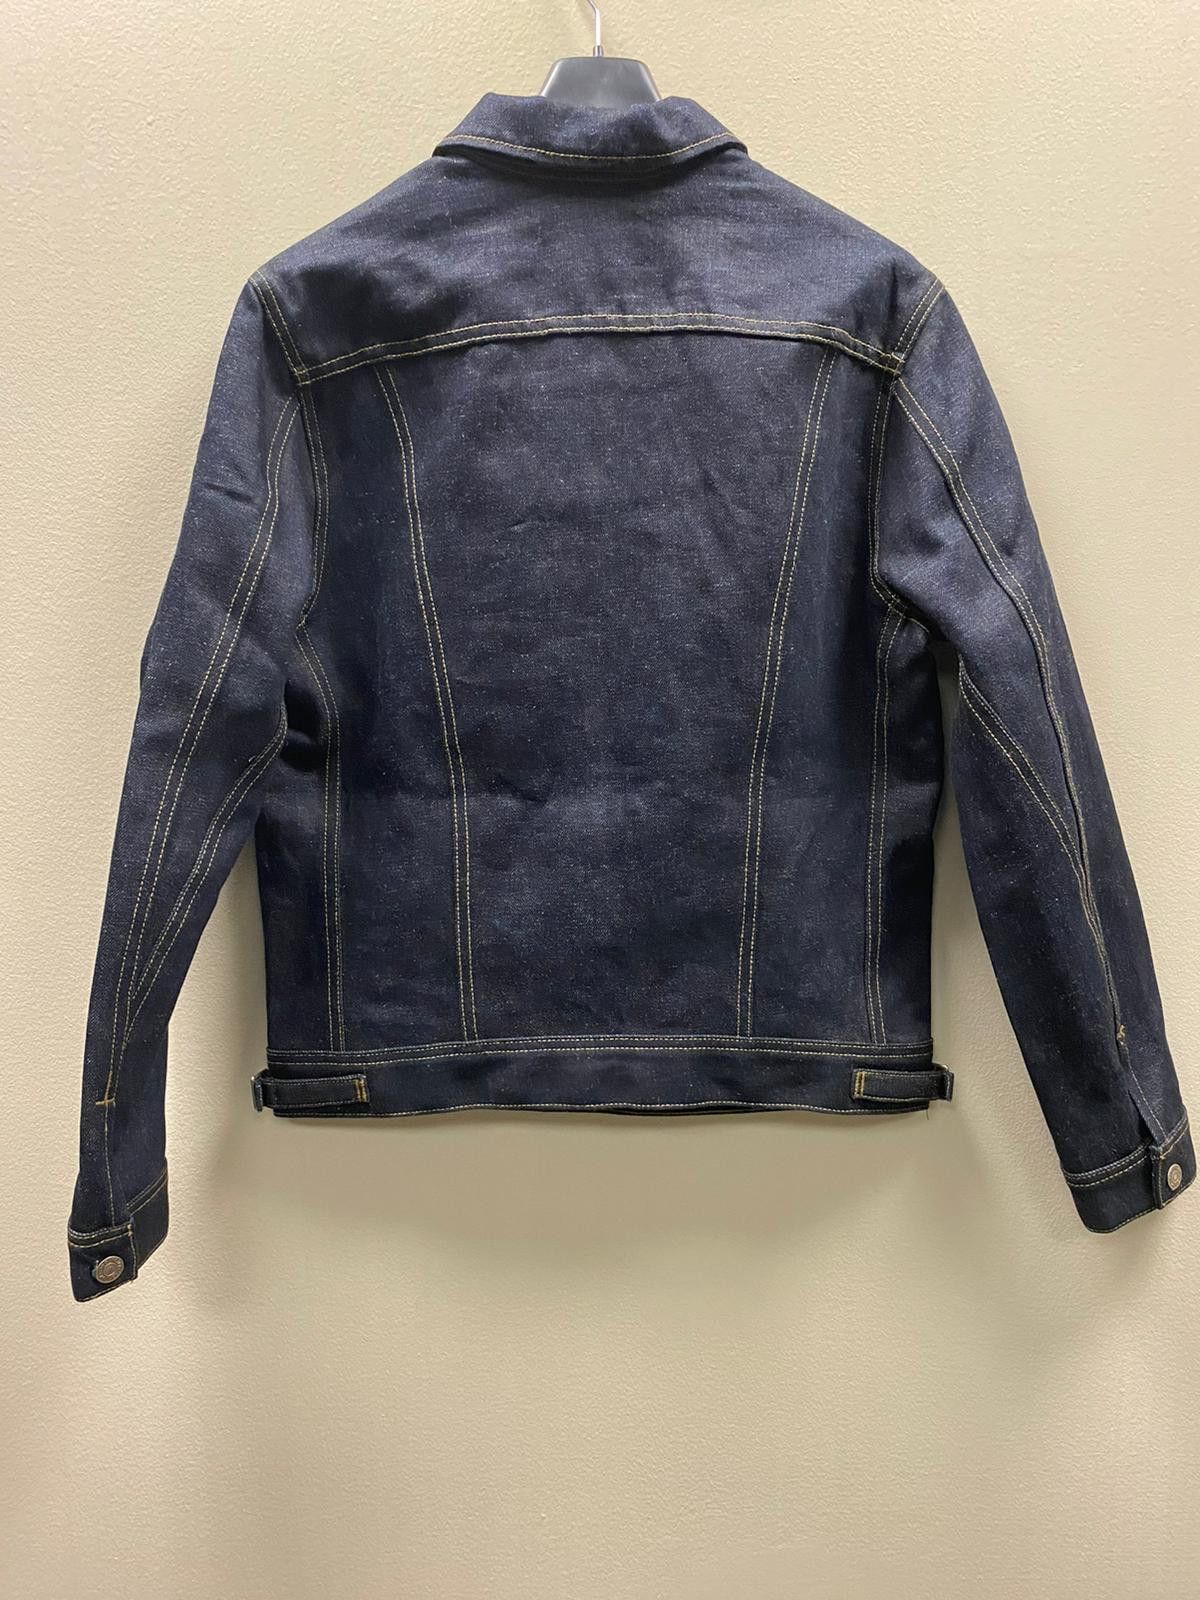 Tom Ford Classic Denim Jacket in Indigo Size US M / EU 48-50 / 2 - 8 Thumbnail